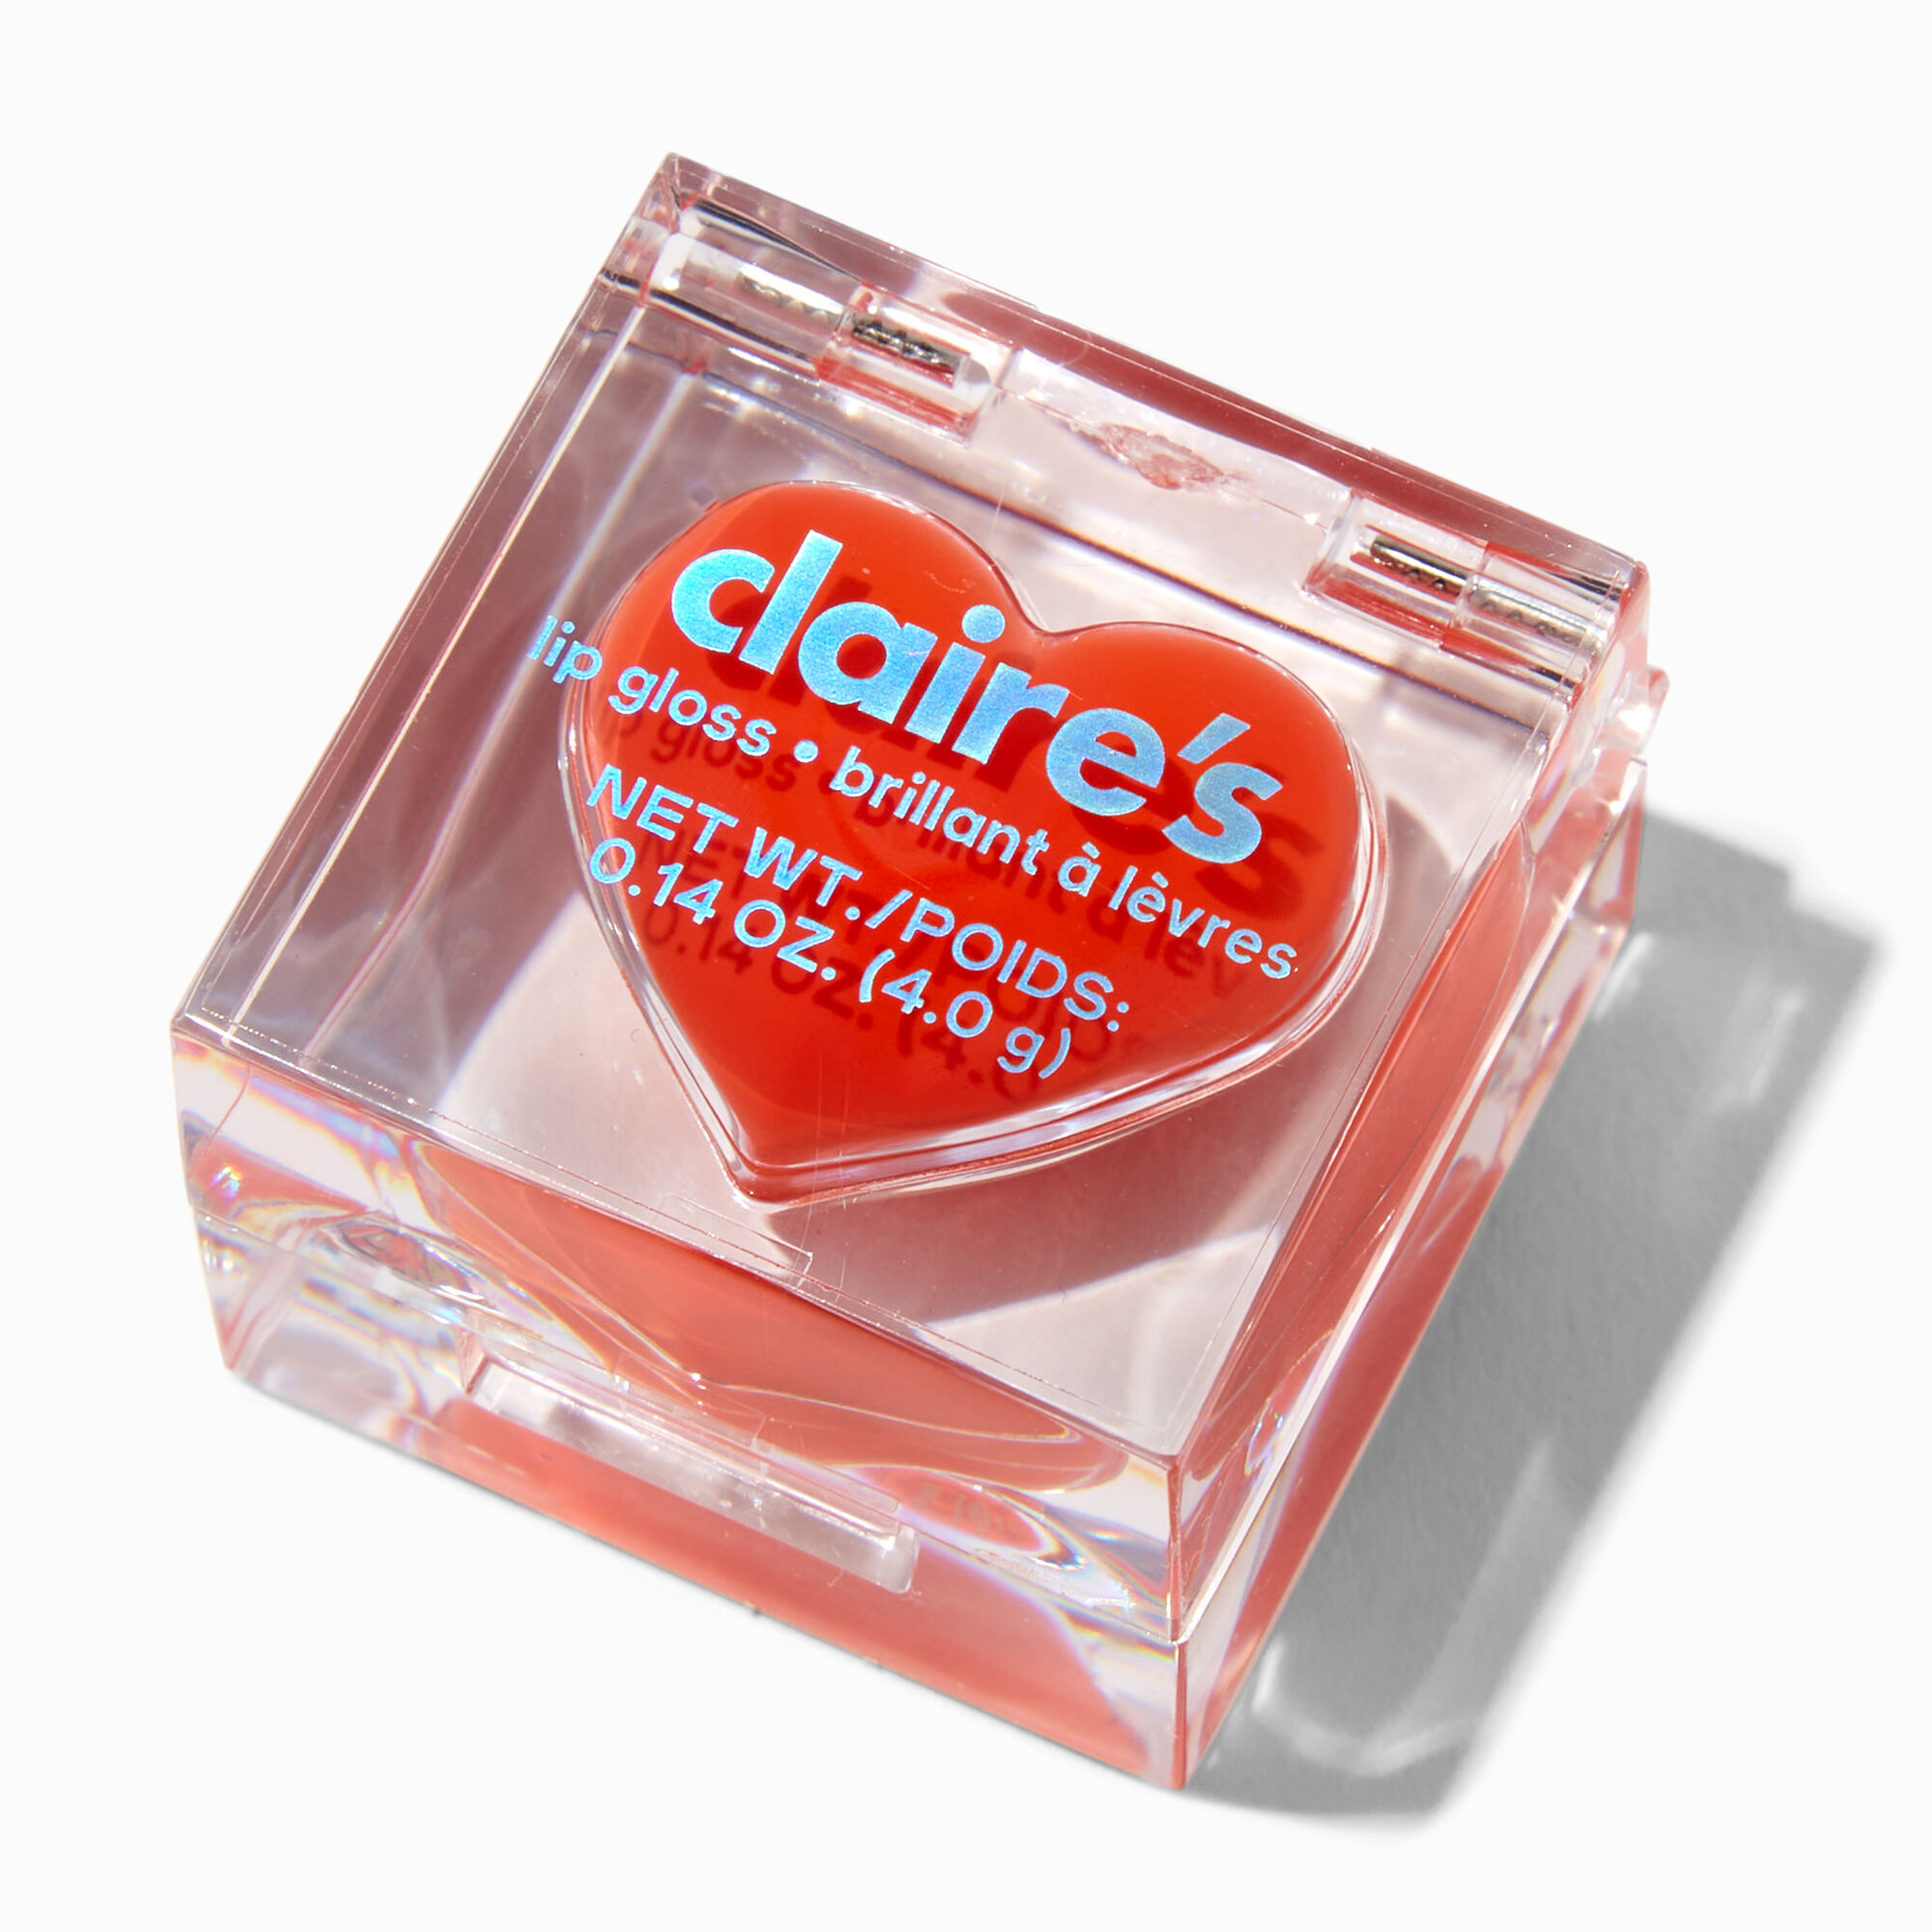 Claire's Crossgates